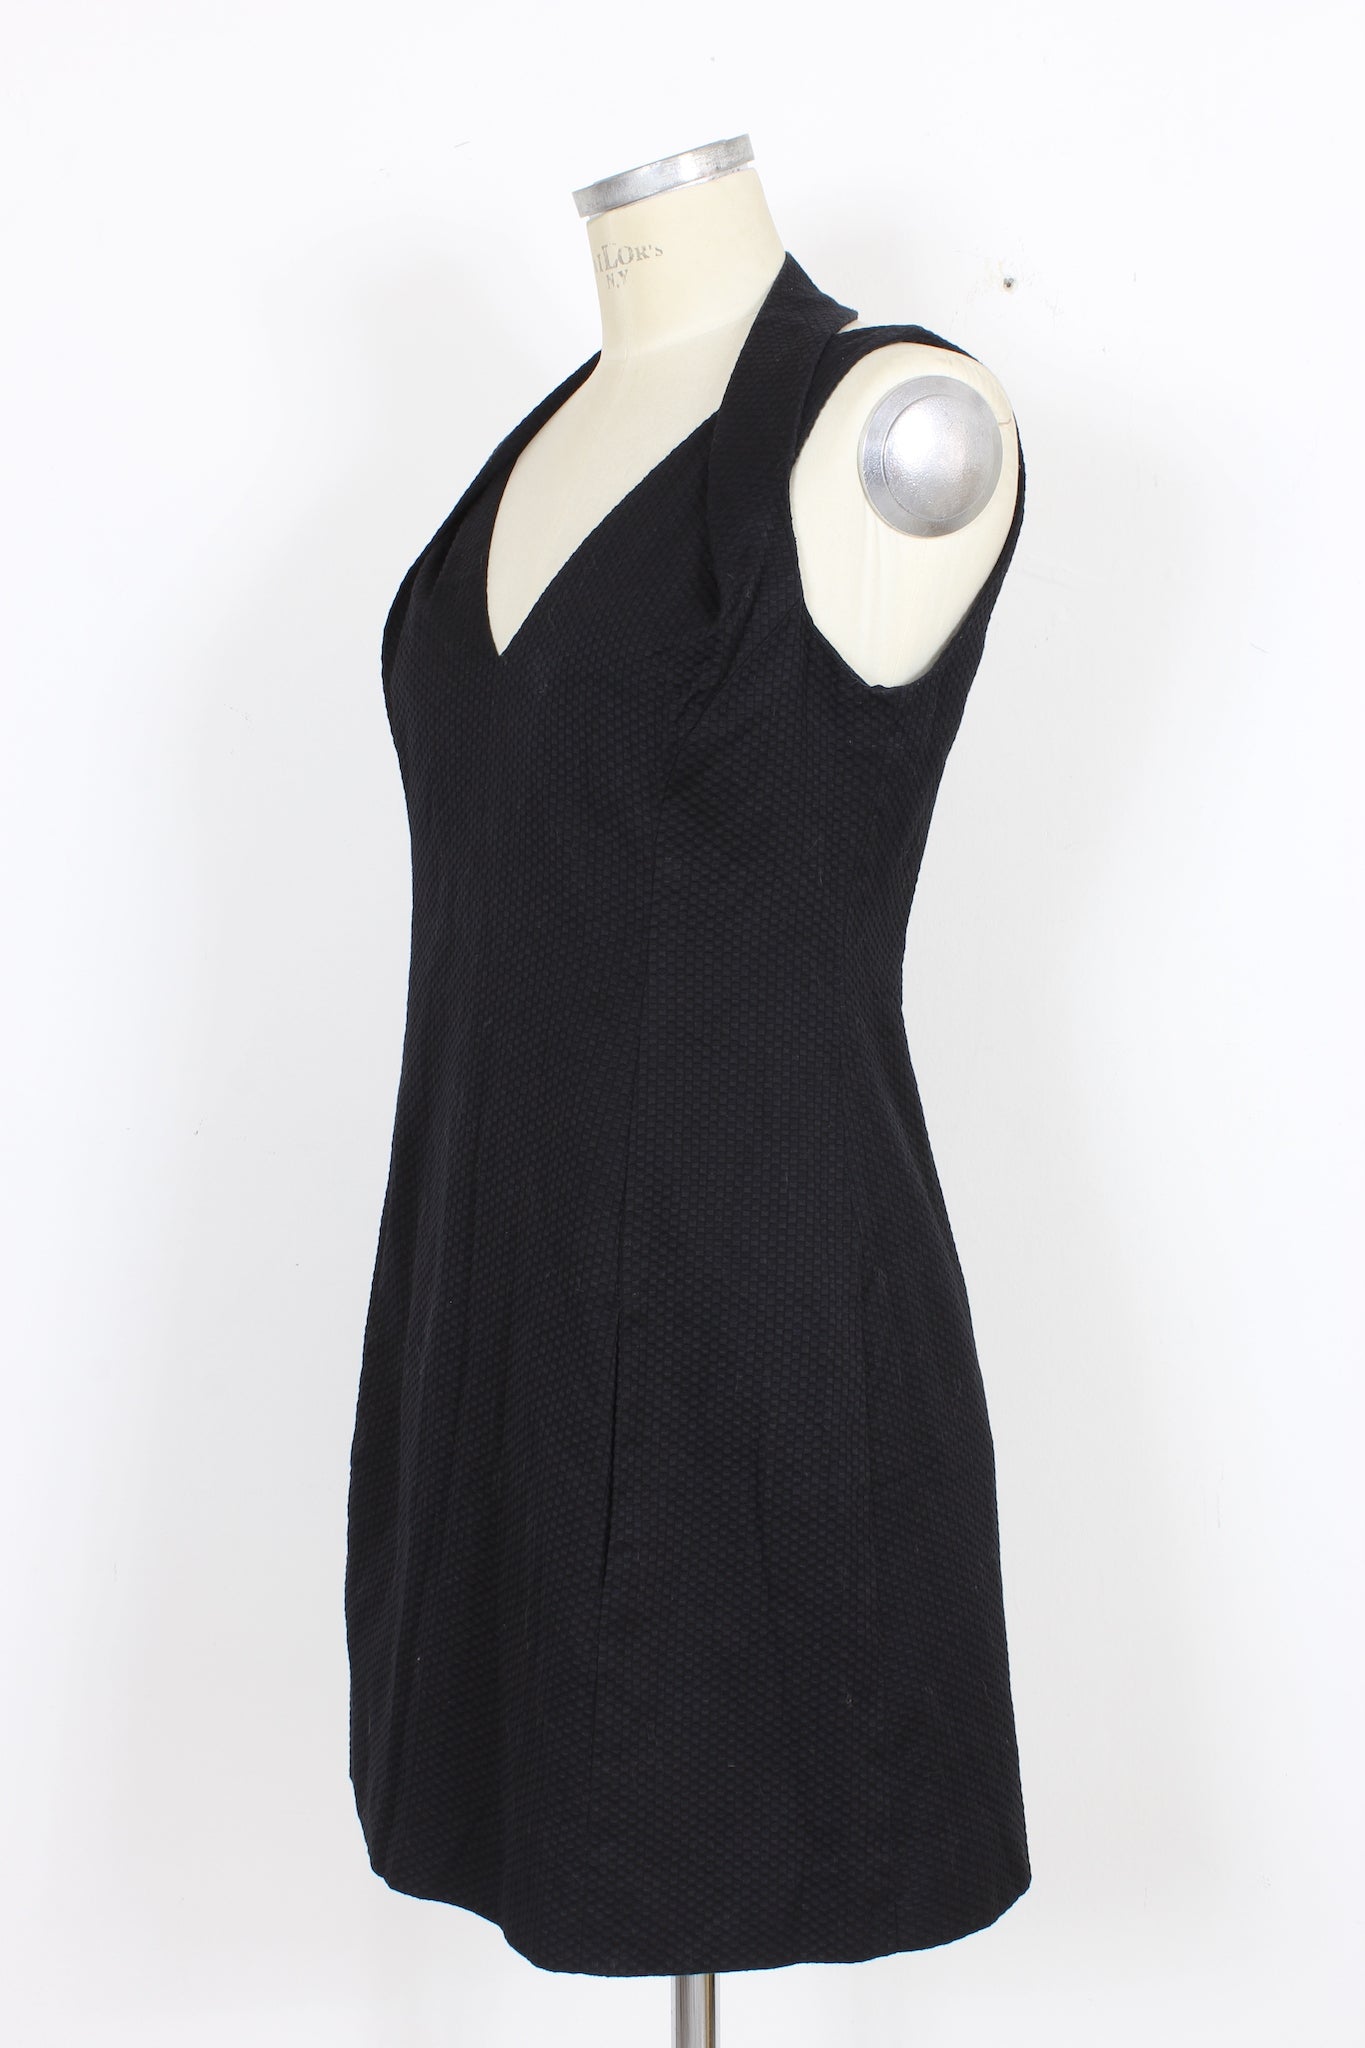 Moschino Black Cotton Vintage Balloon Dress 2000s